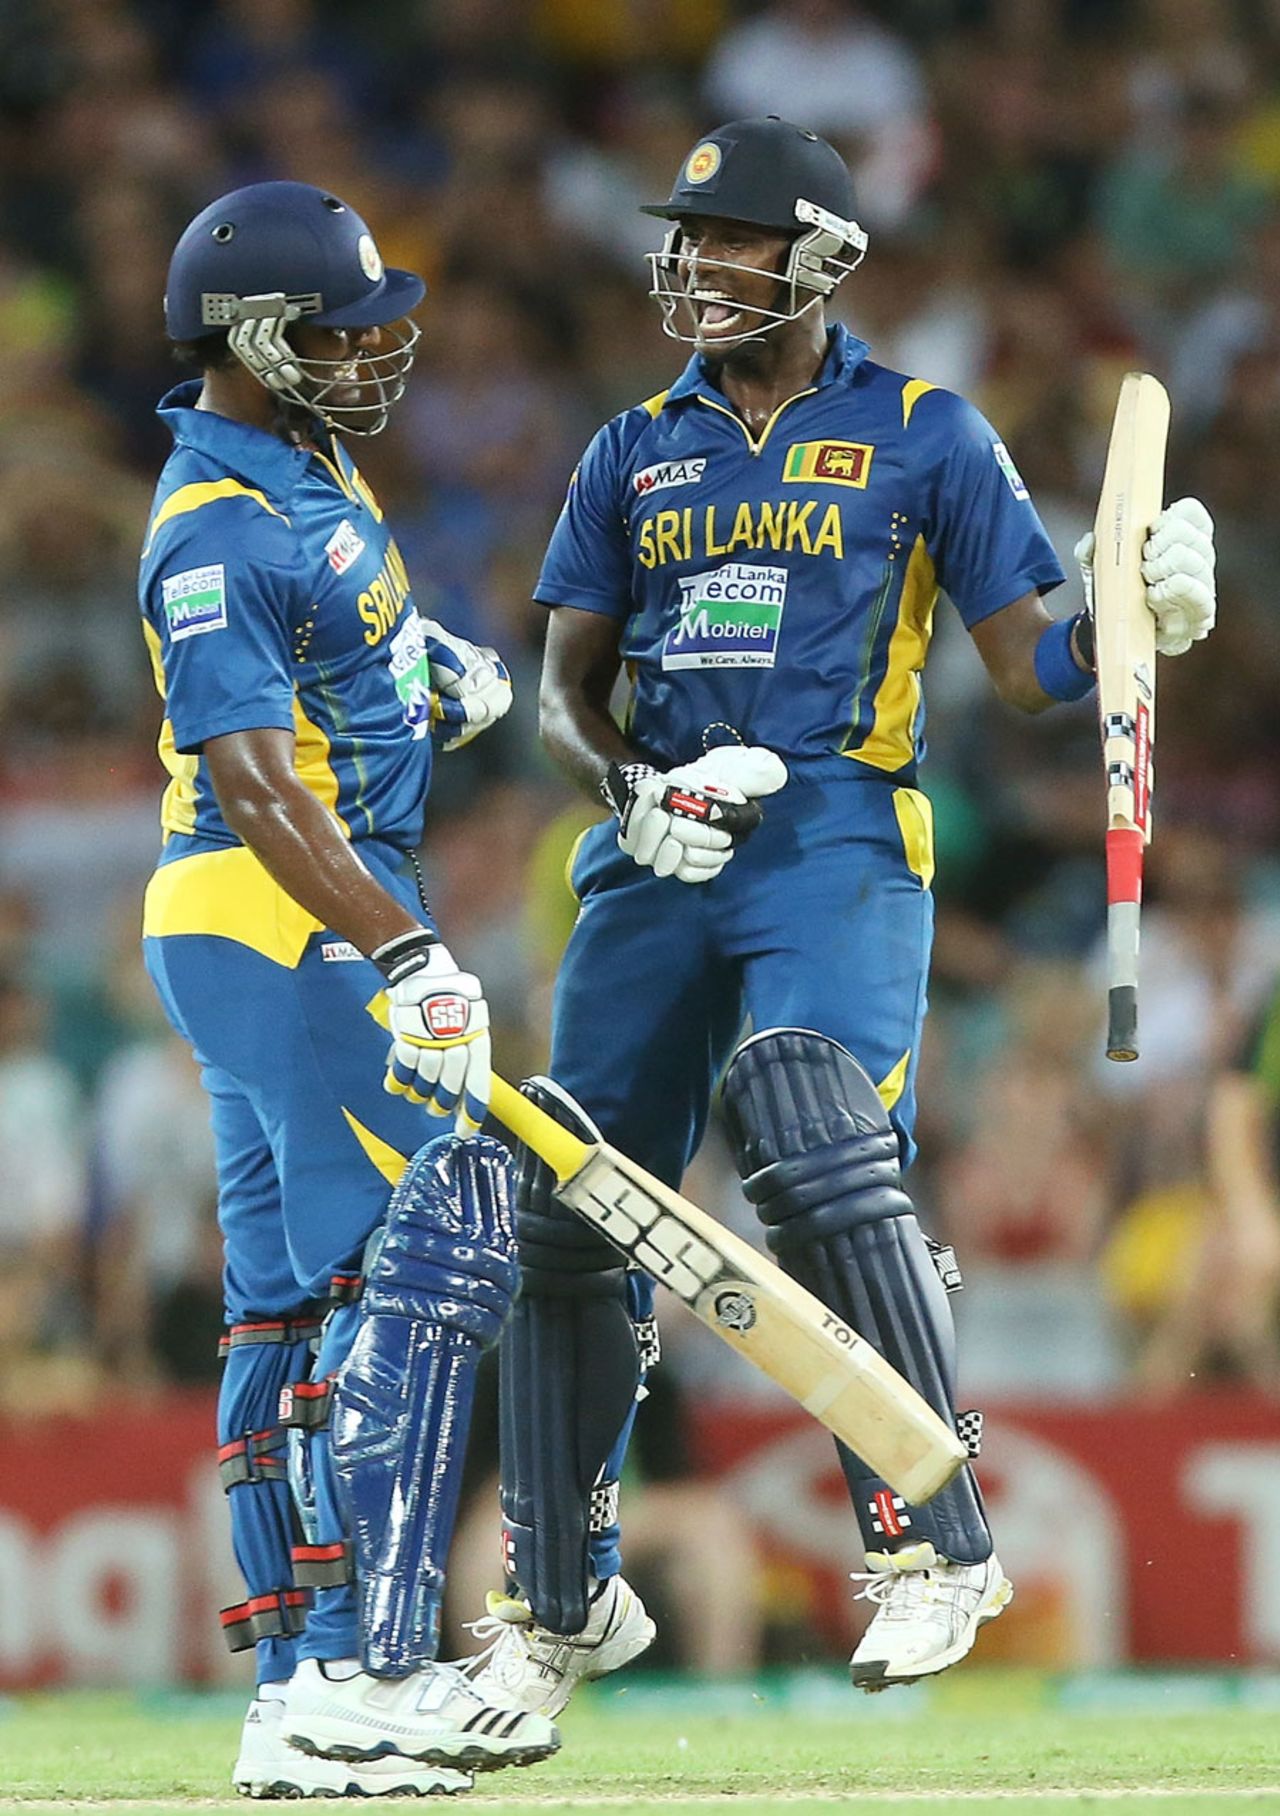 Thisara Perara and Angelo Mathews celebrate victory, Australia v Sri Lanka, 1st T20, Sydney, January 26, 2013